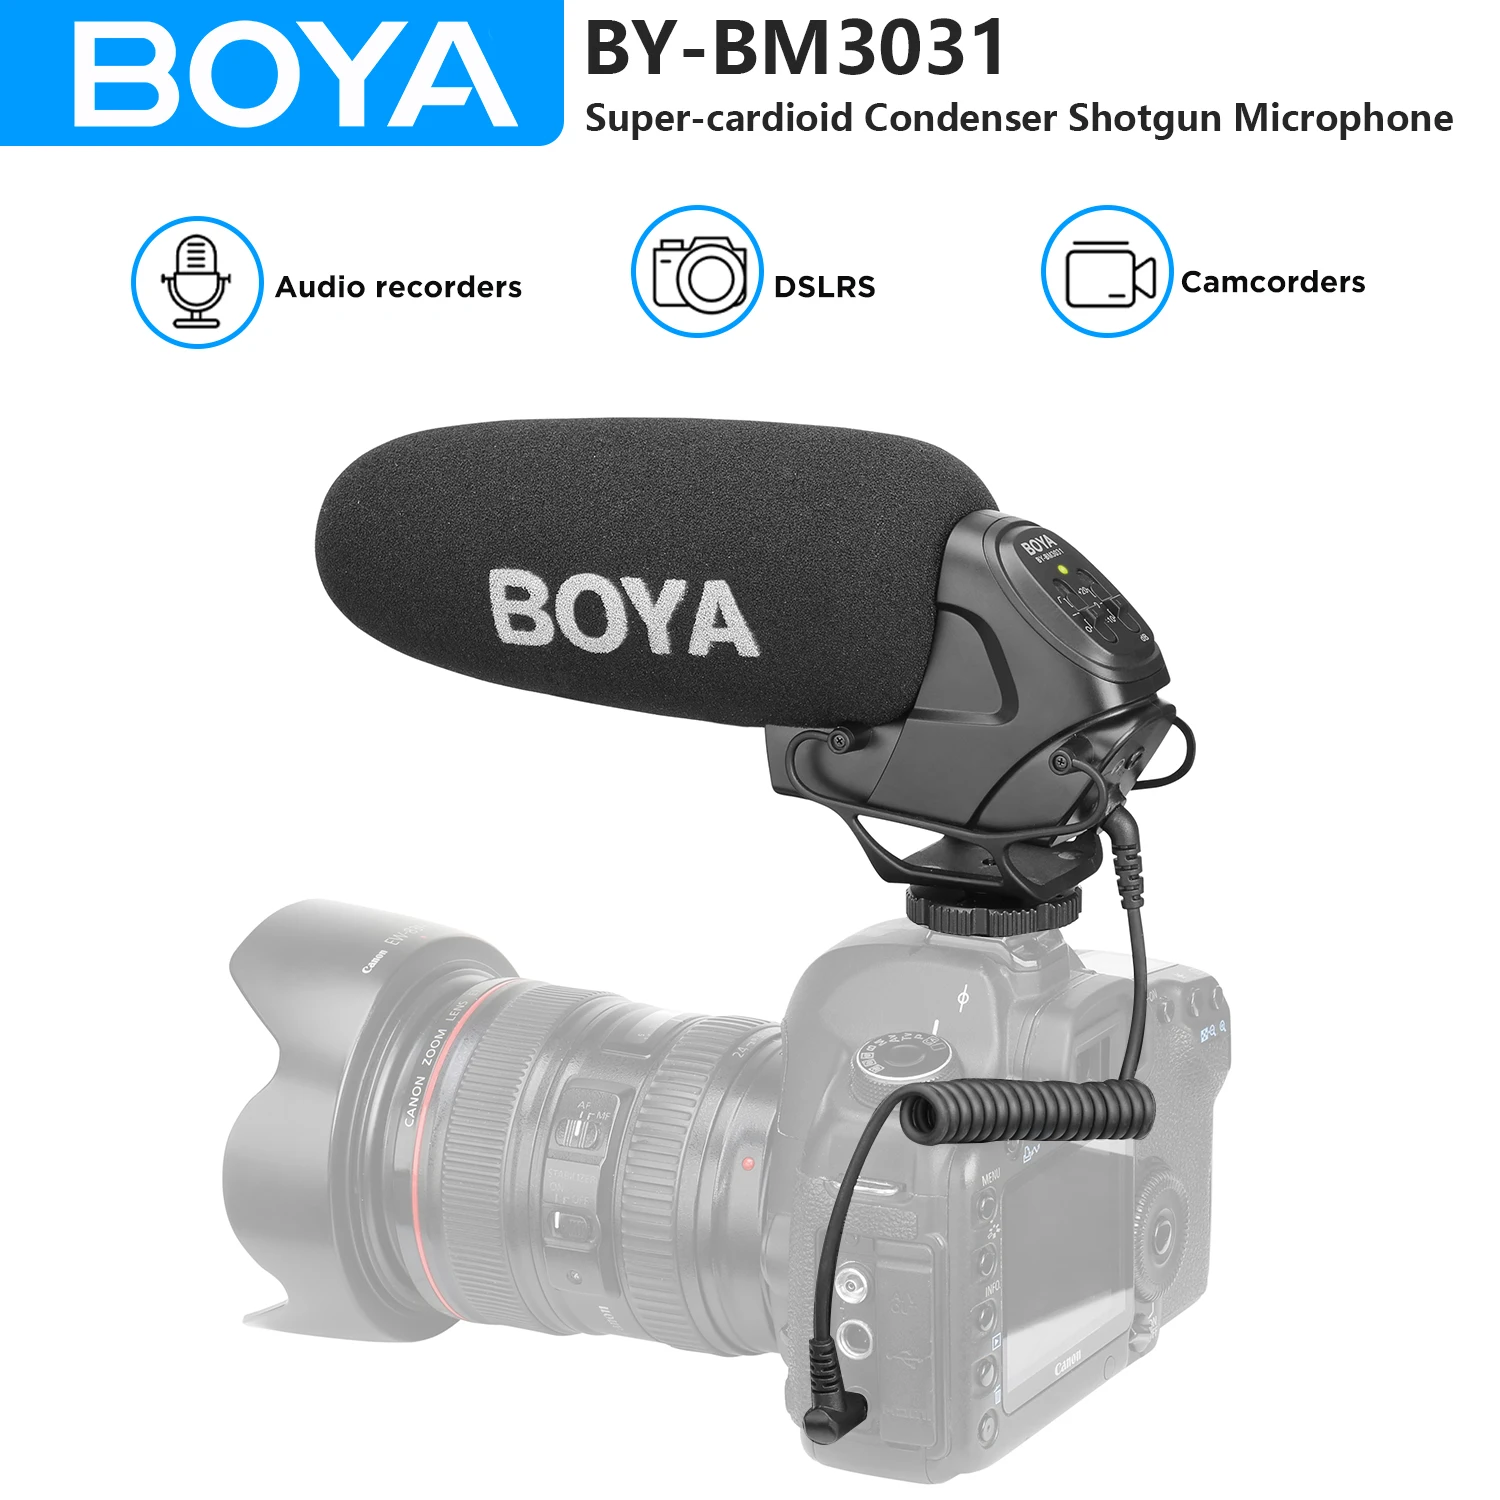 

BOYA BY-BM3031 Super-Cardioid On-Camera Shotgun Microphone for DSLR Cameras Camcorders Youtube Recording Live Streaming Vlog